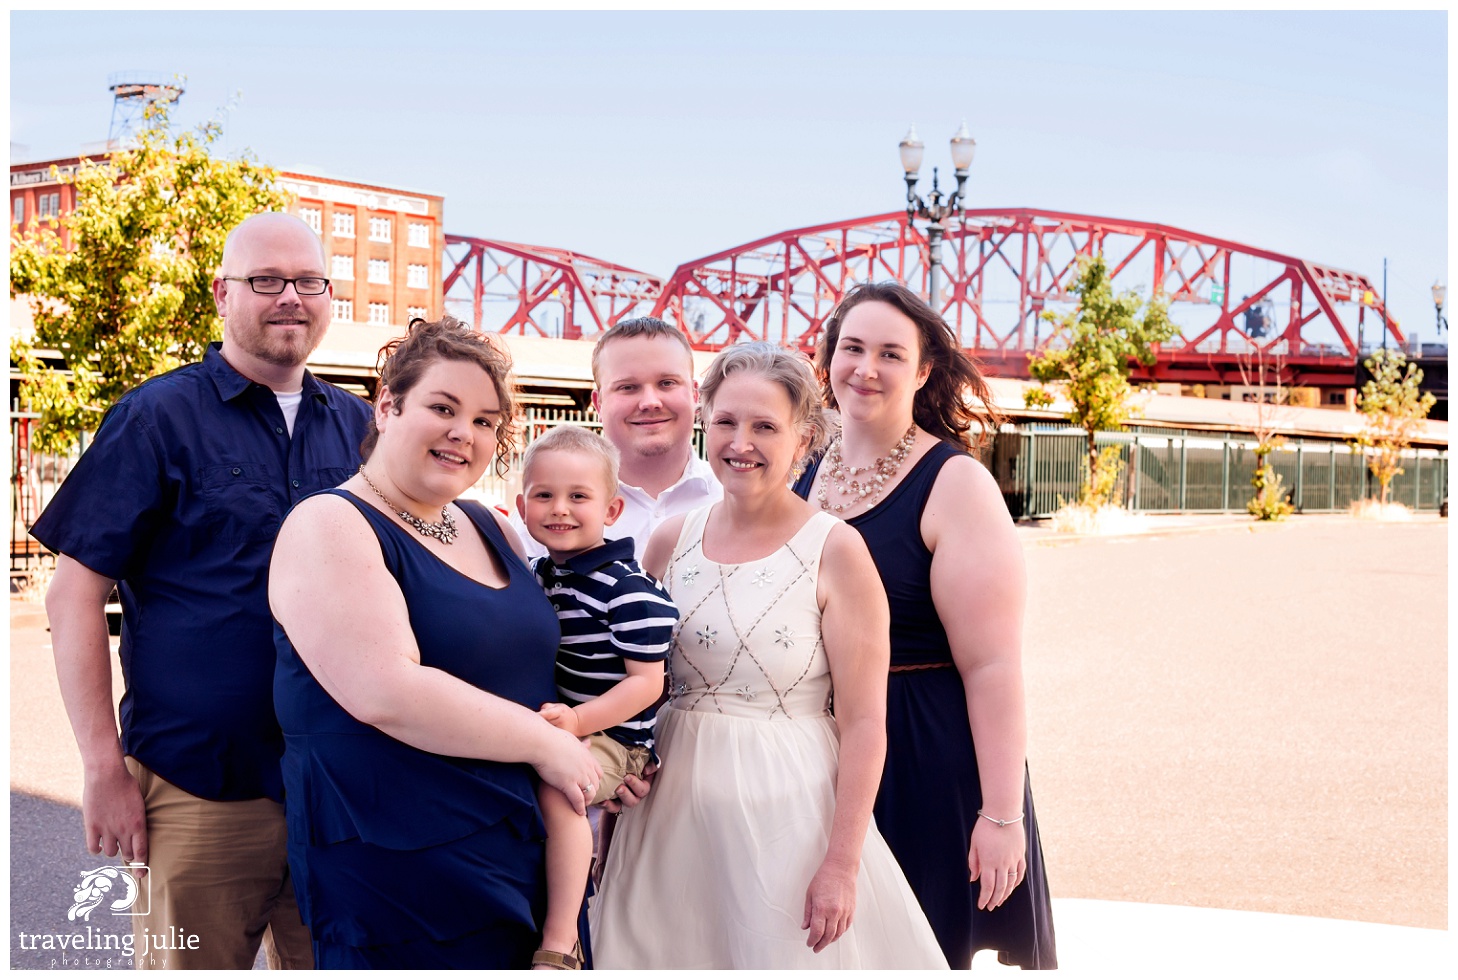 Family portrait with Portland's Broadway Bridge